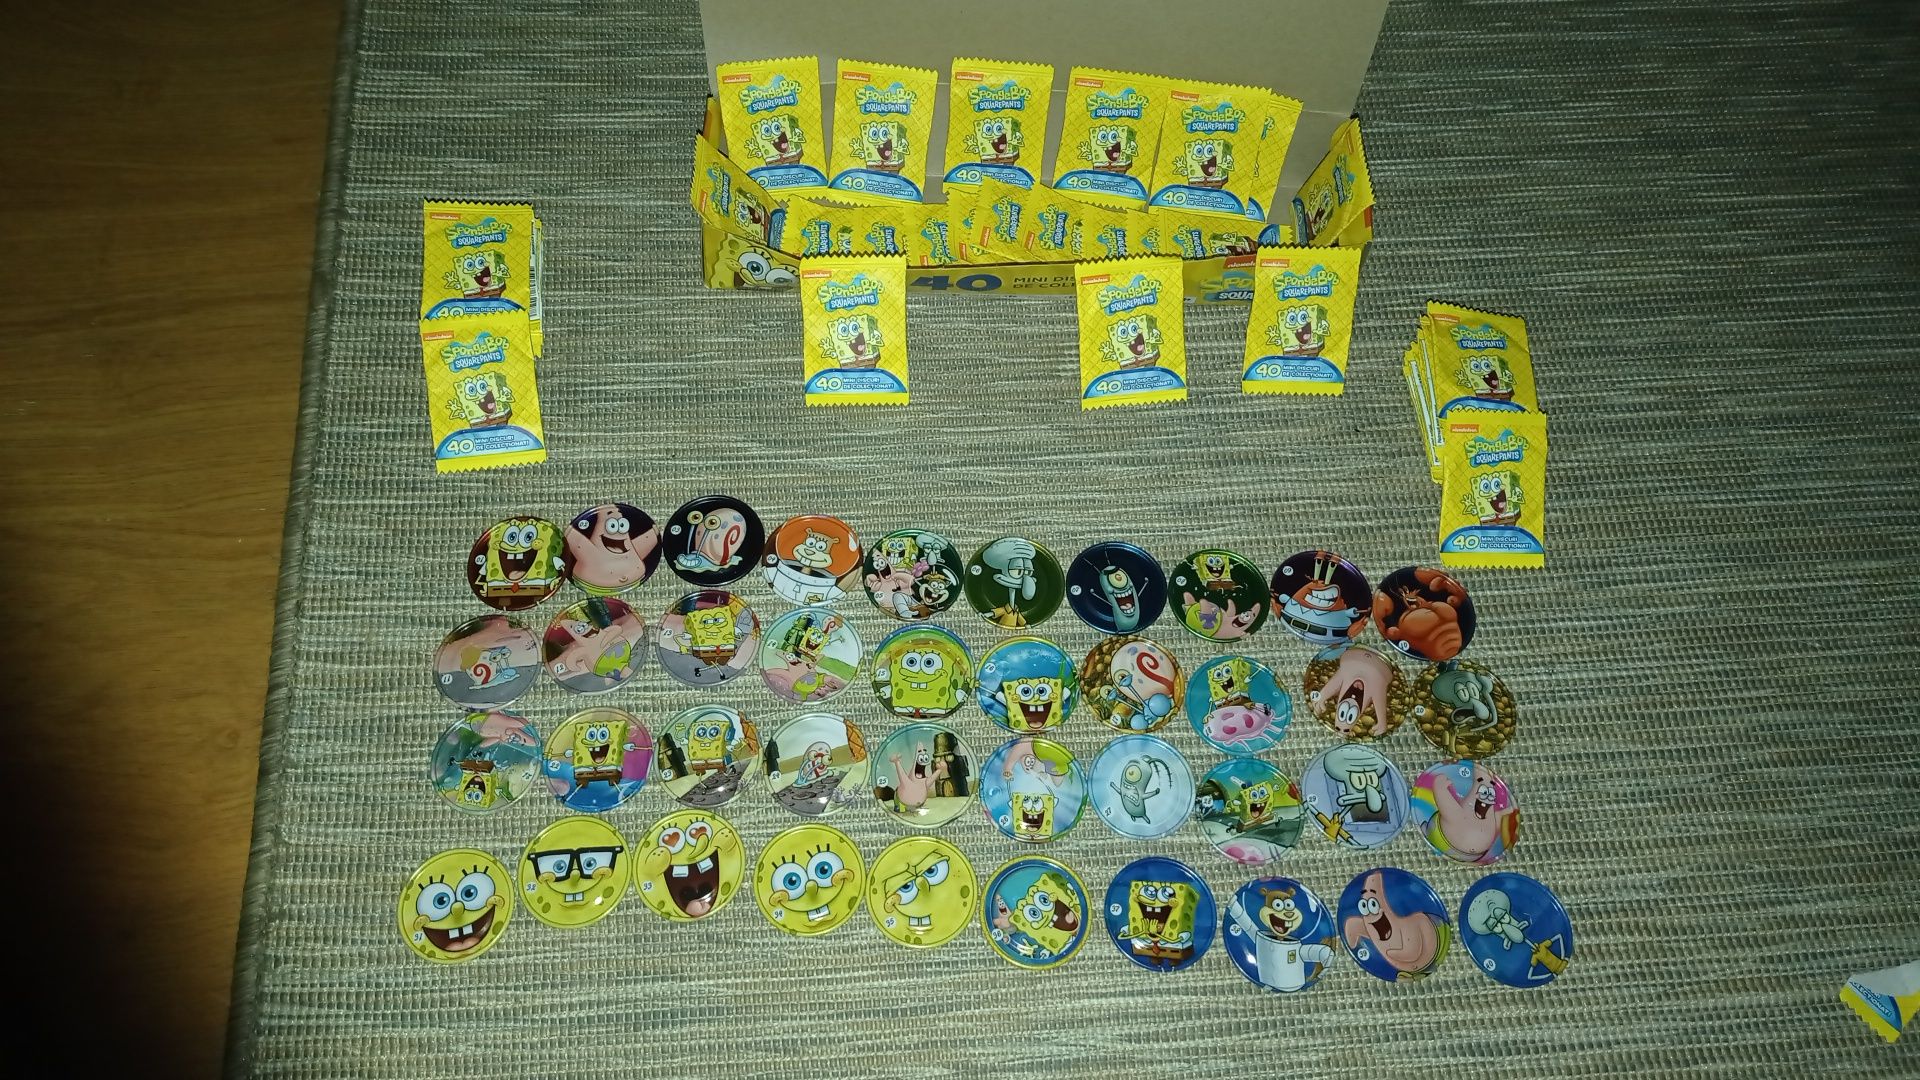 Colecția SpongeBob Squarepants